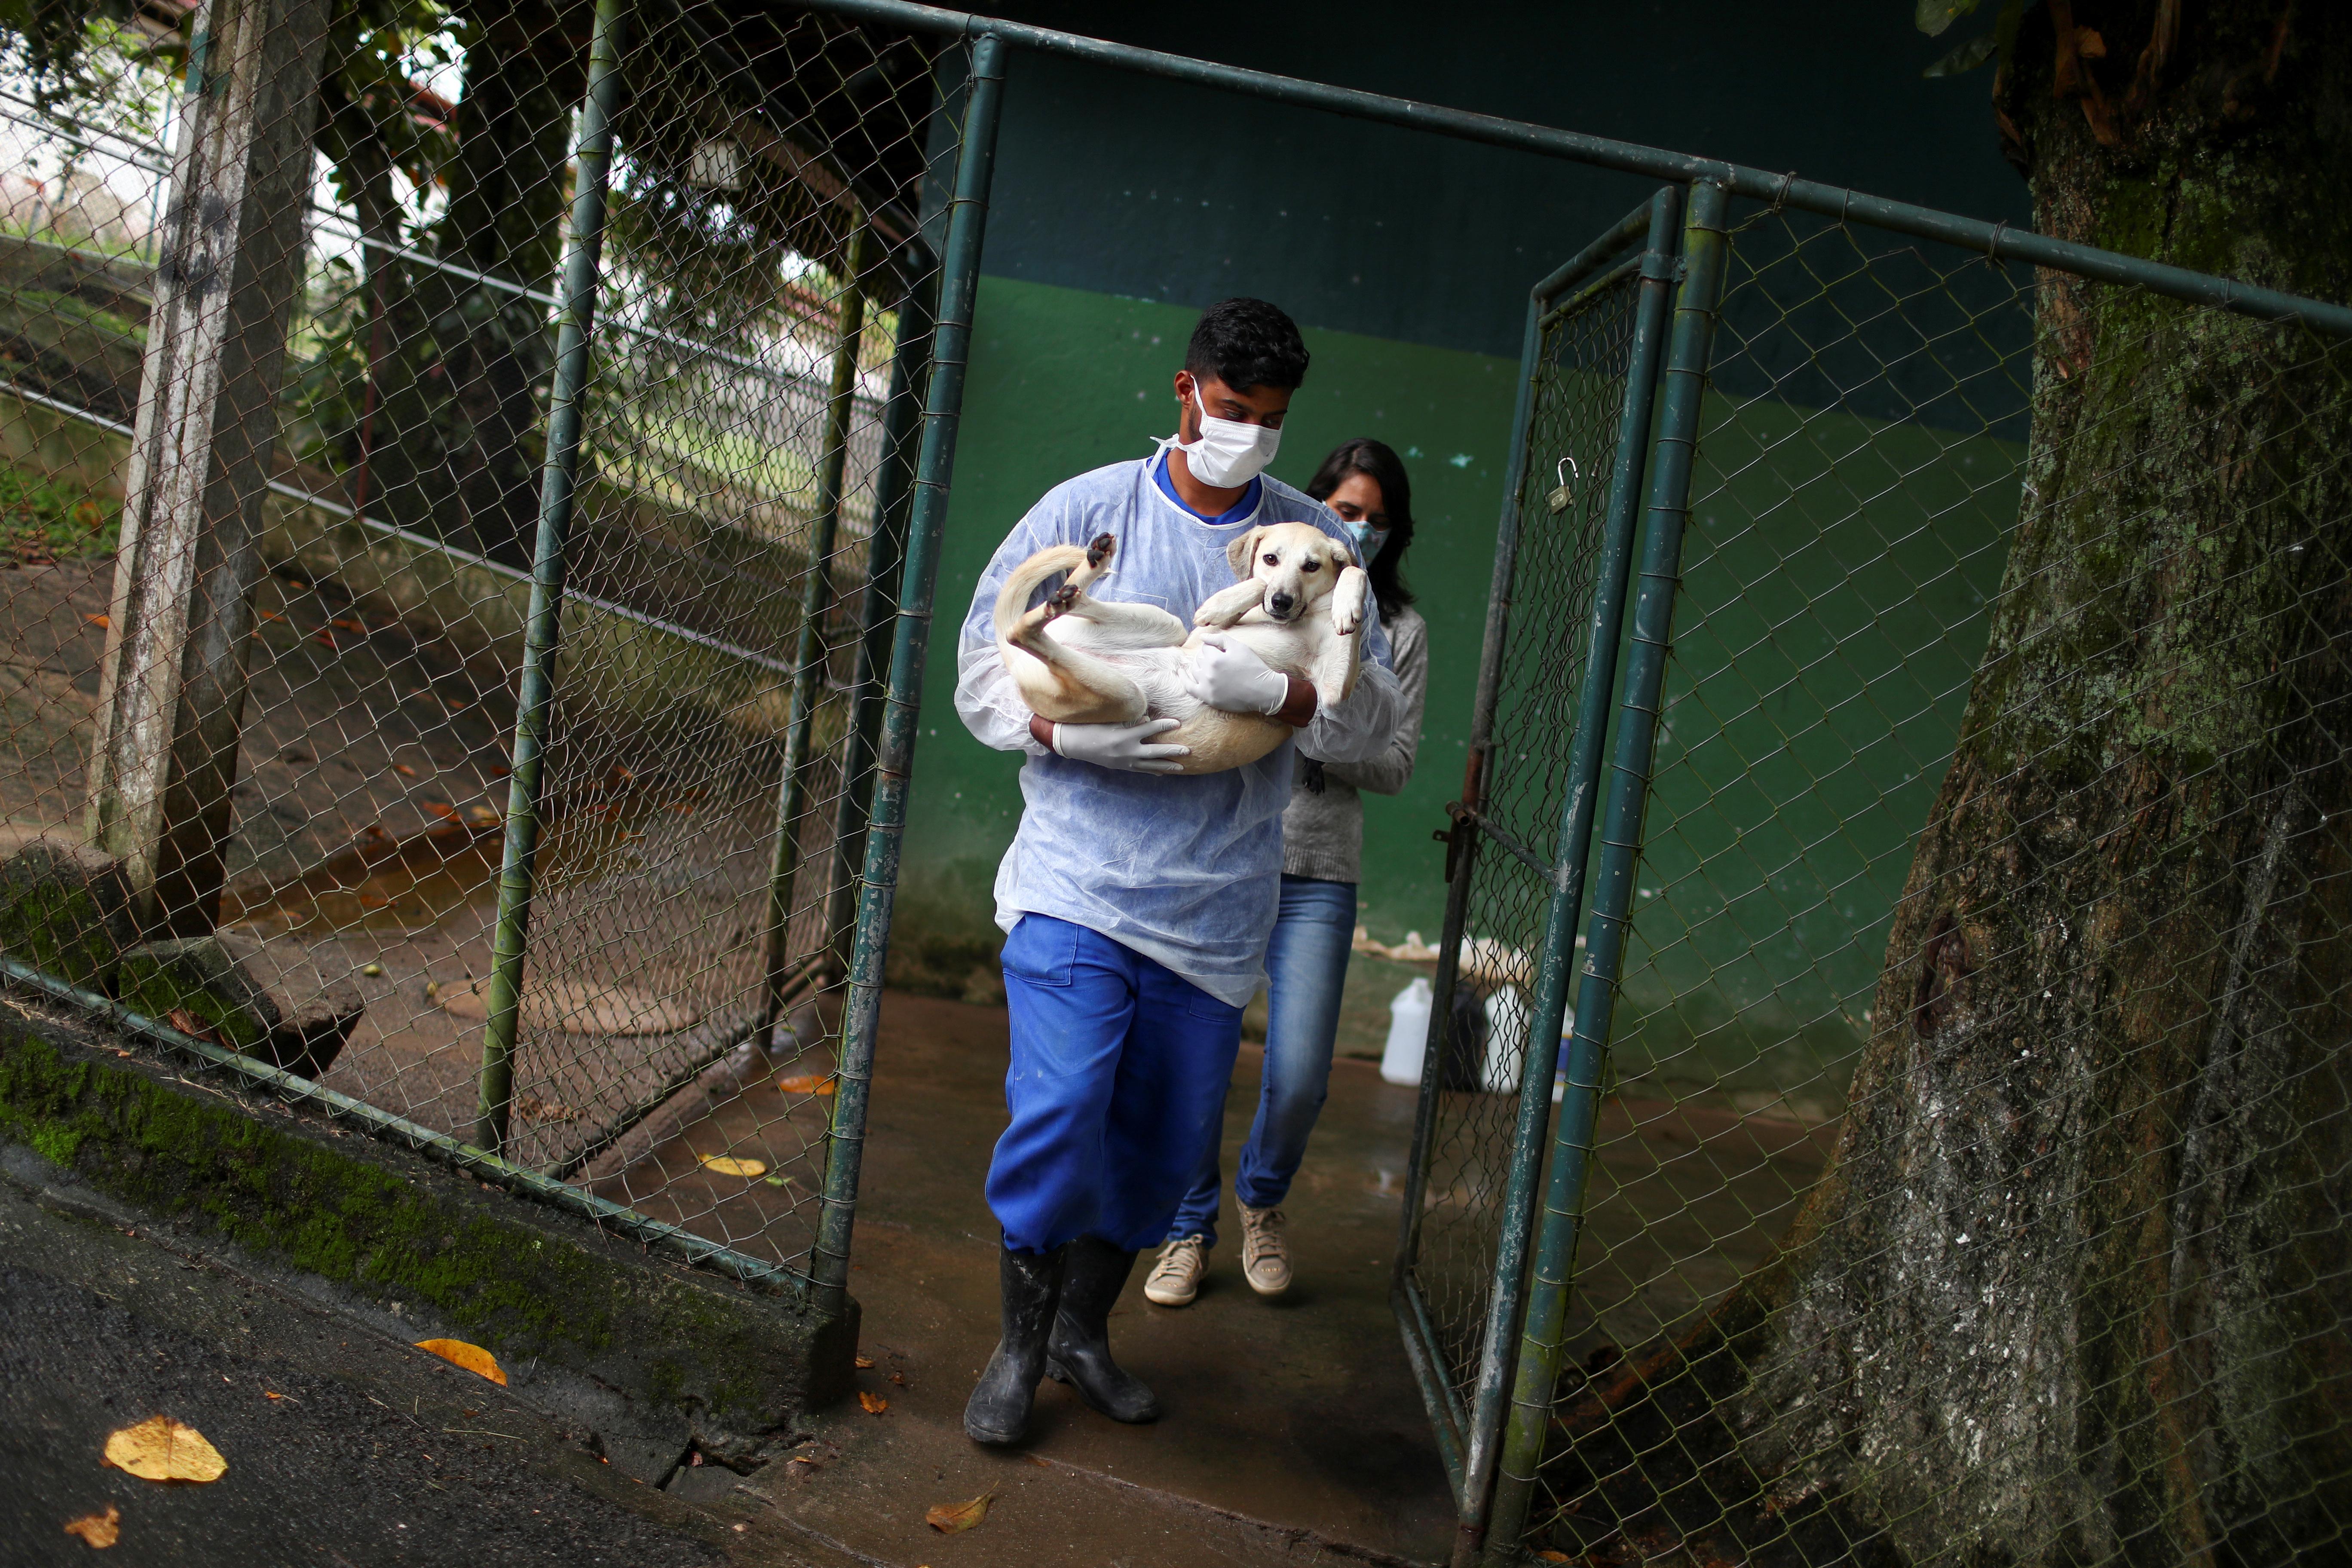 Rio pet delivery brings companionship to Brazilians in isolation